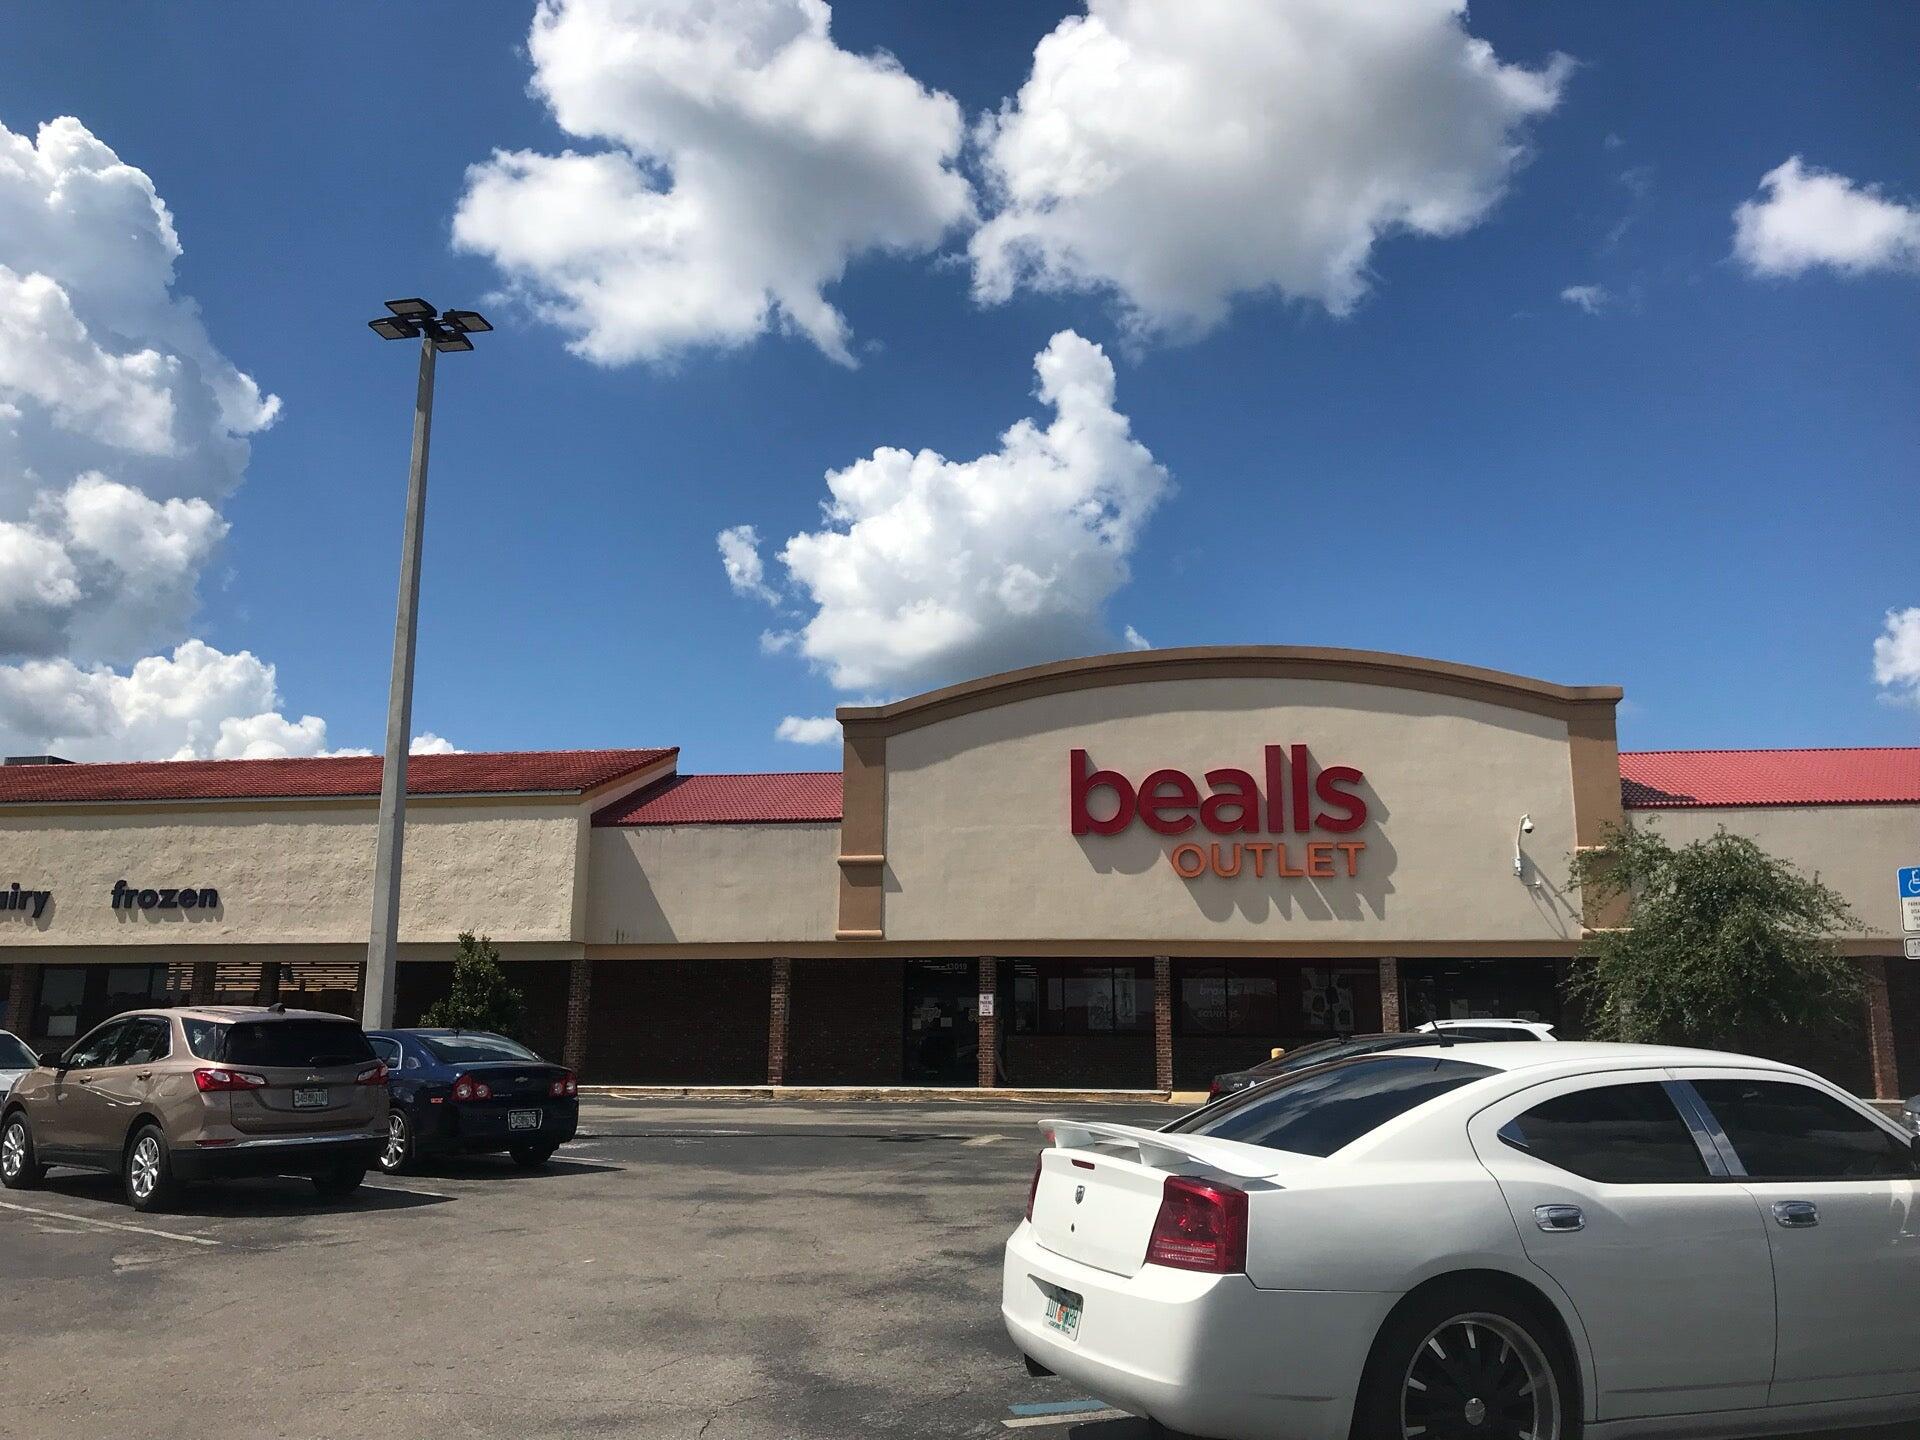 Bealls Outlet - Brooksville, FL - Nextdoor